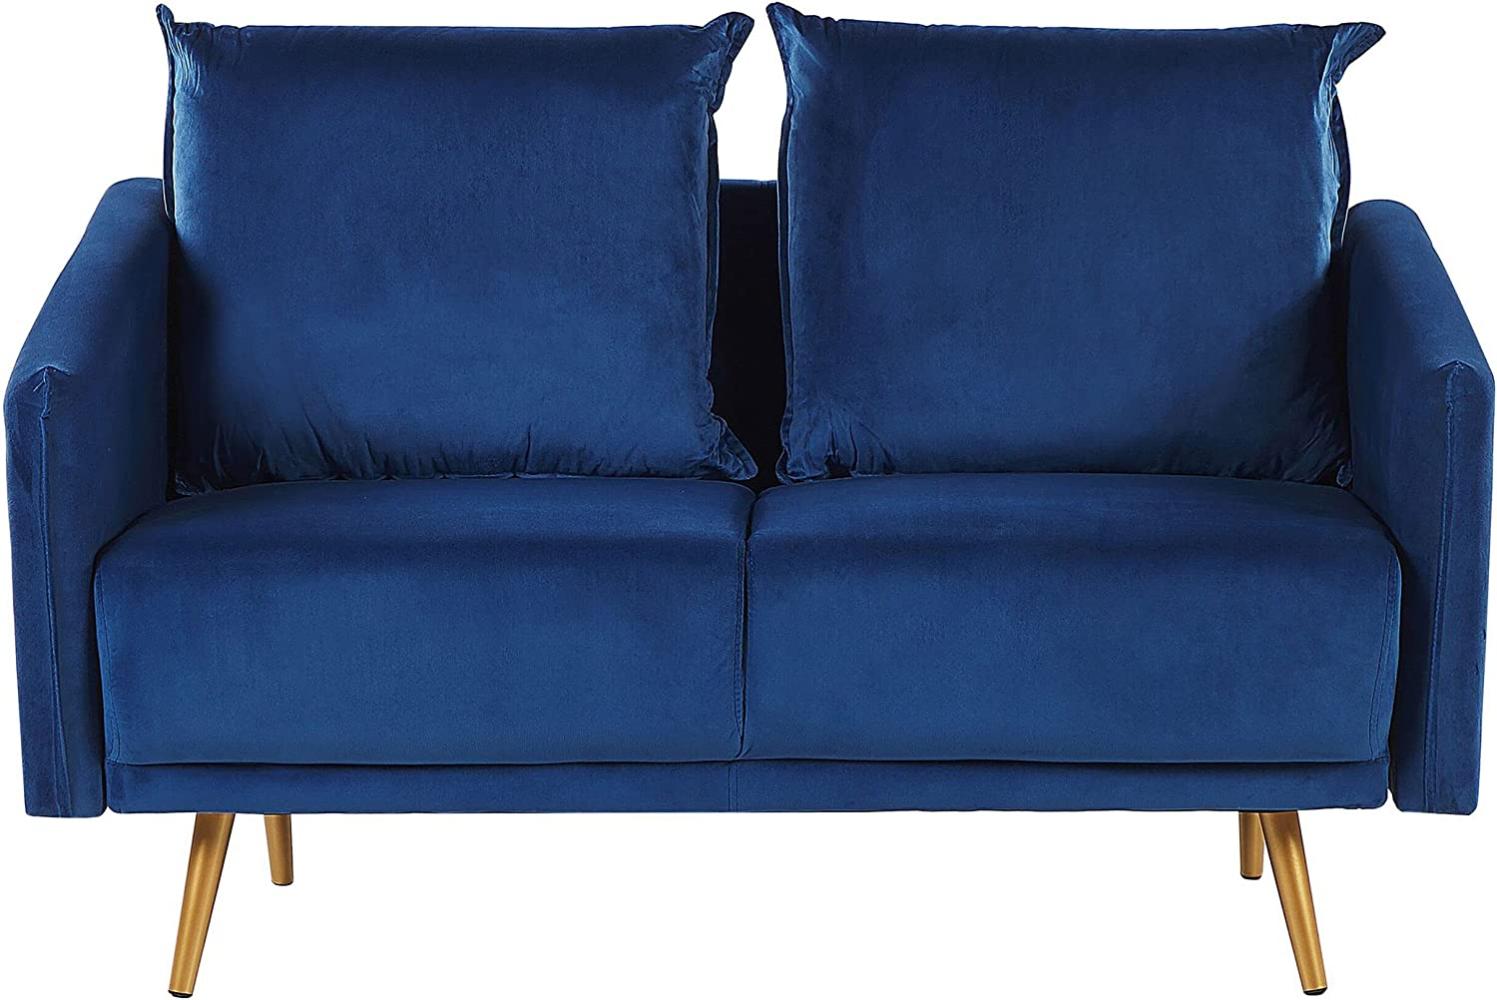 2-Sitzer Sofa Samtstoff dunkelblau MAURA Bild 1